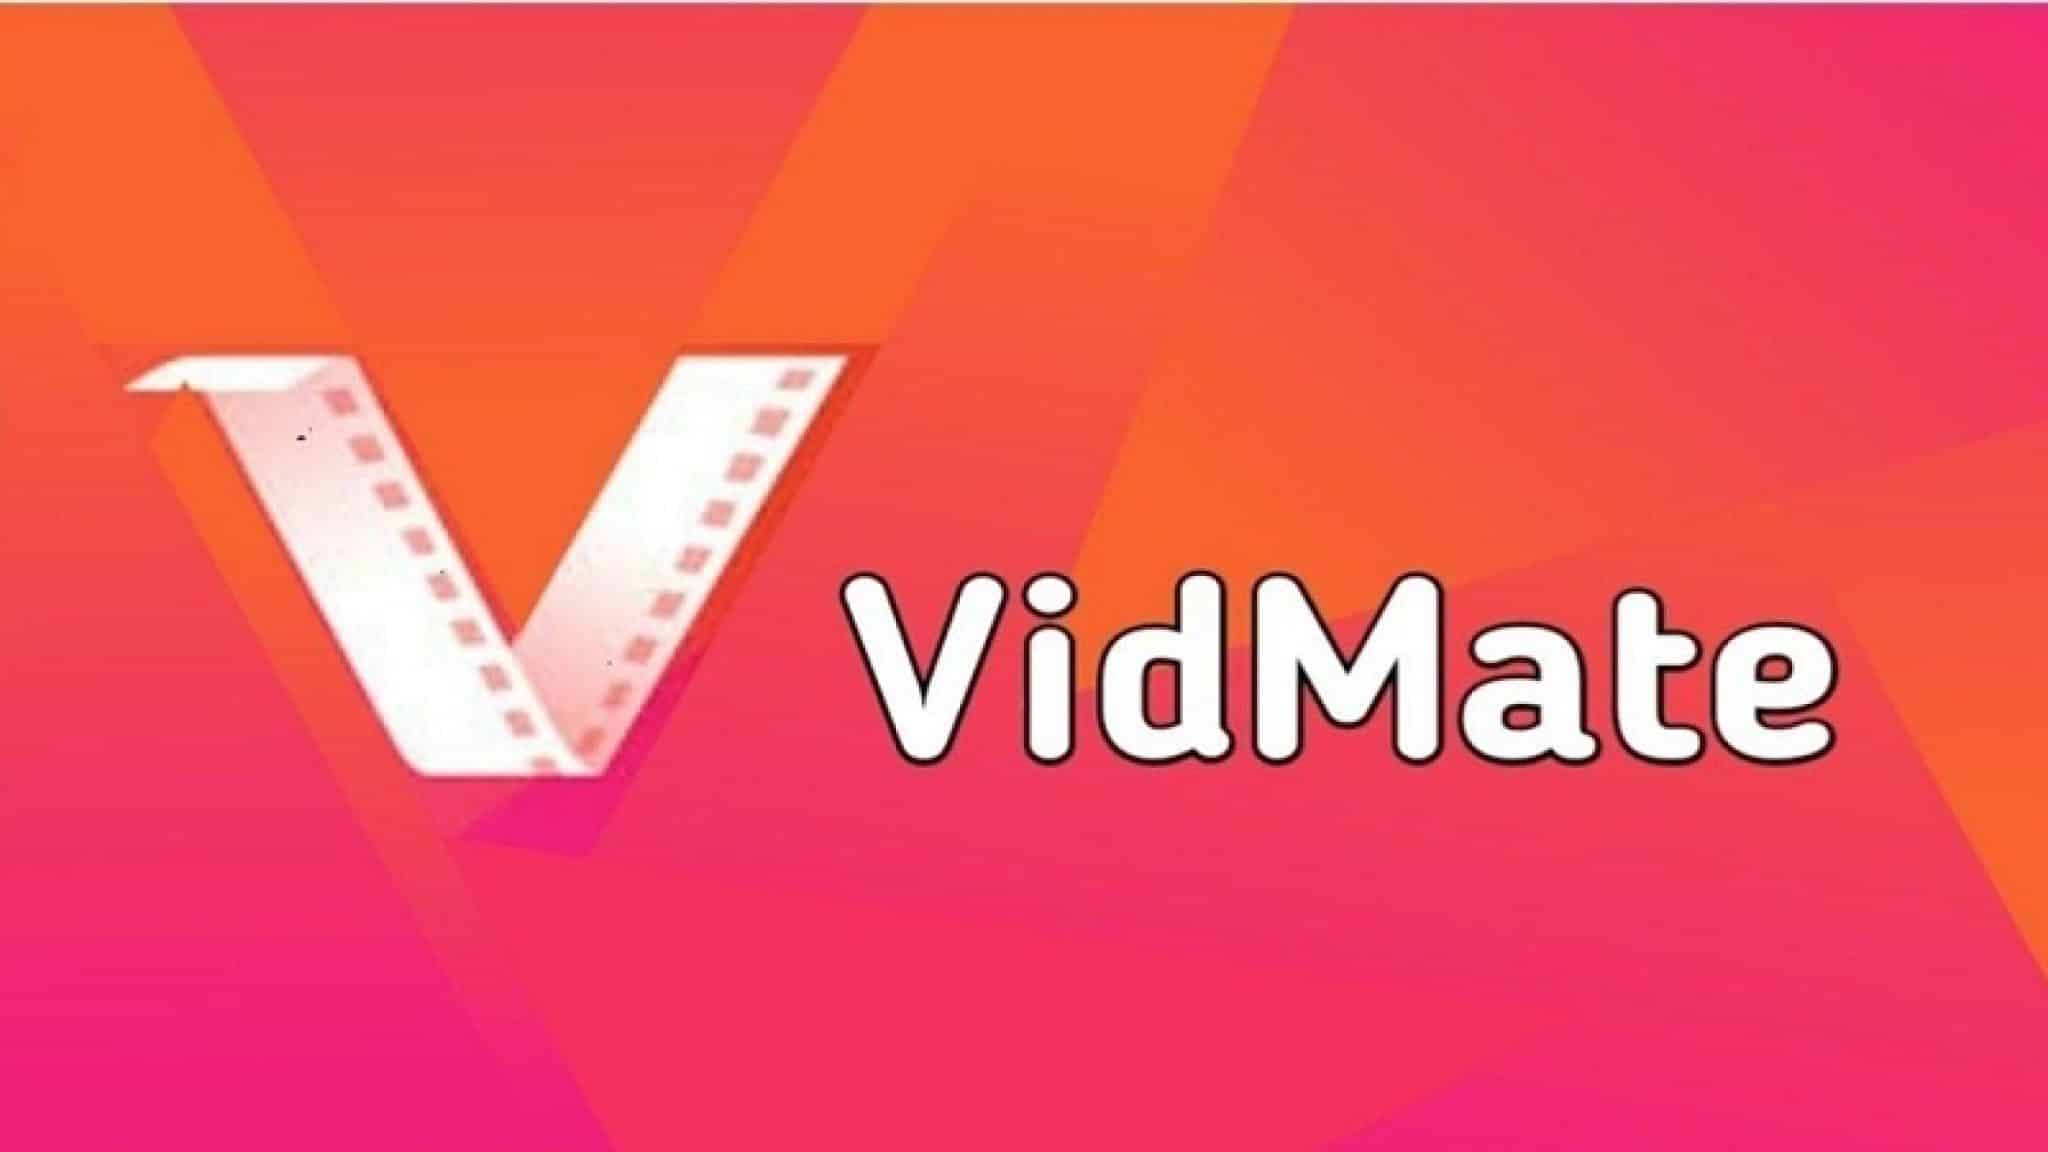 vidmate app download 2012